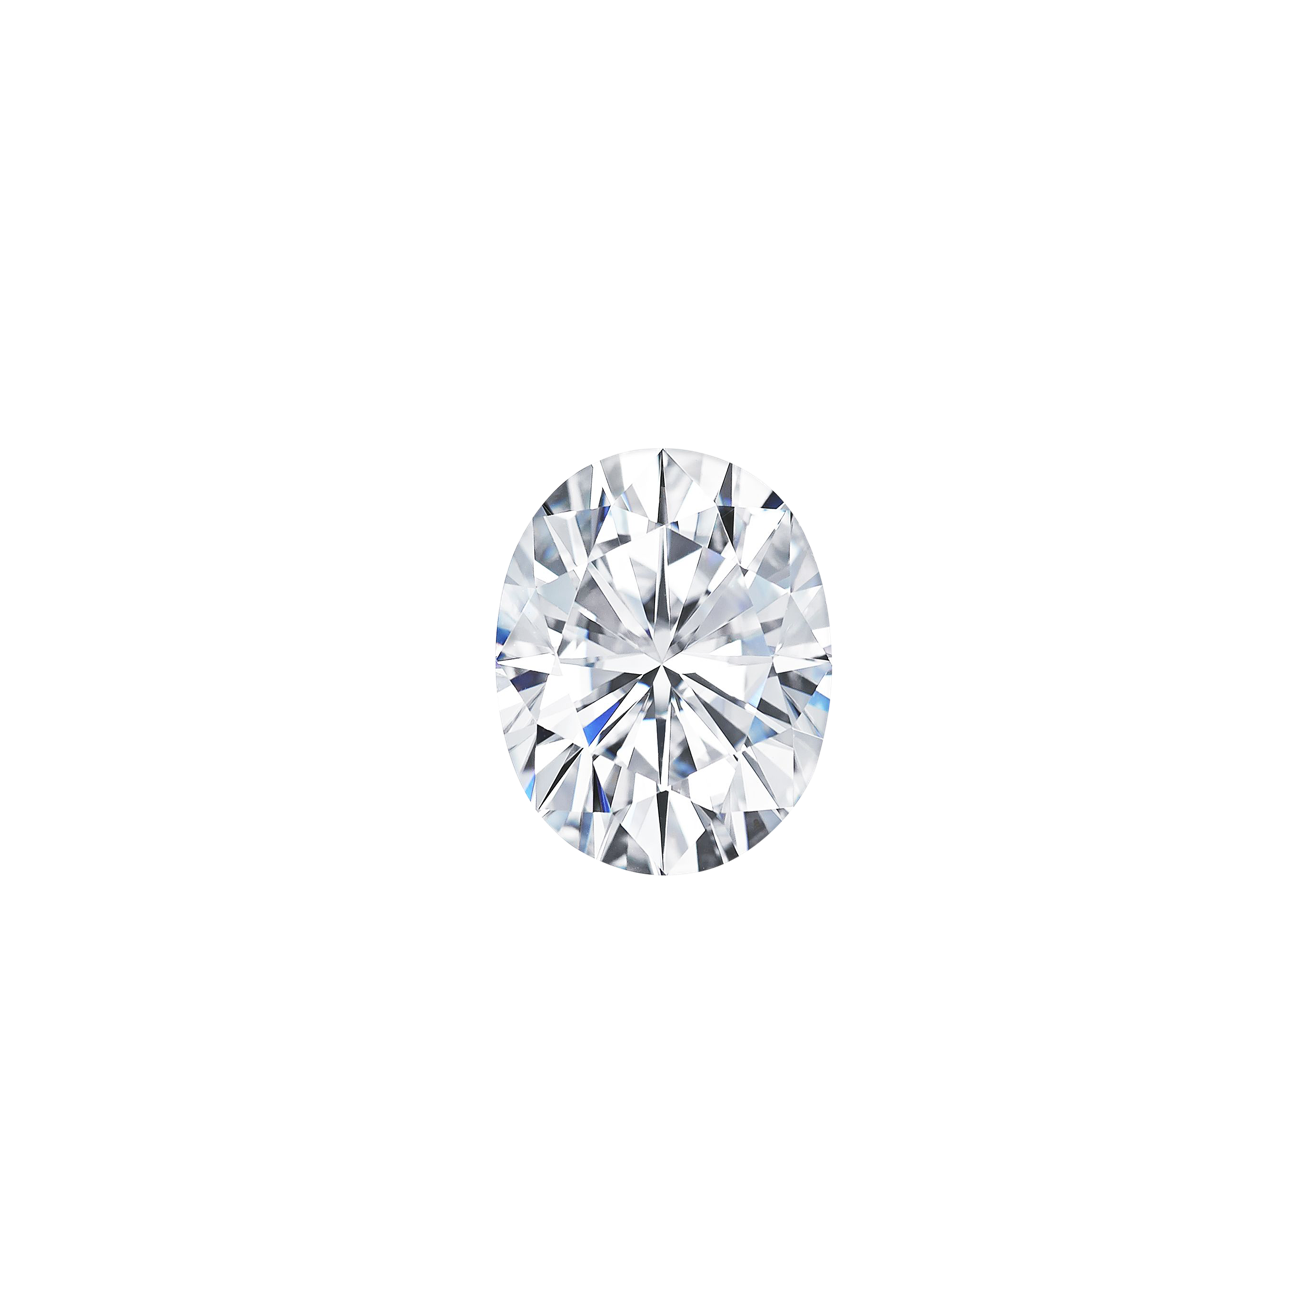 Oval diamond loose stone